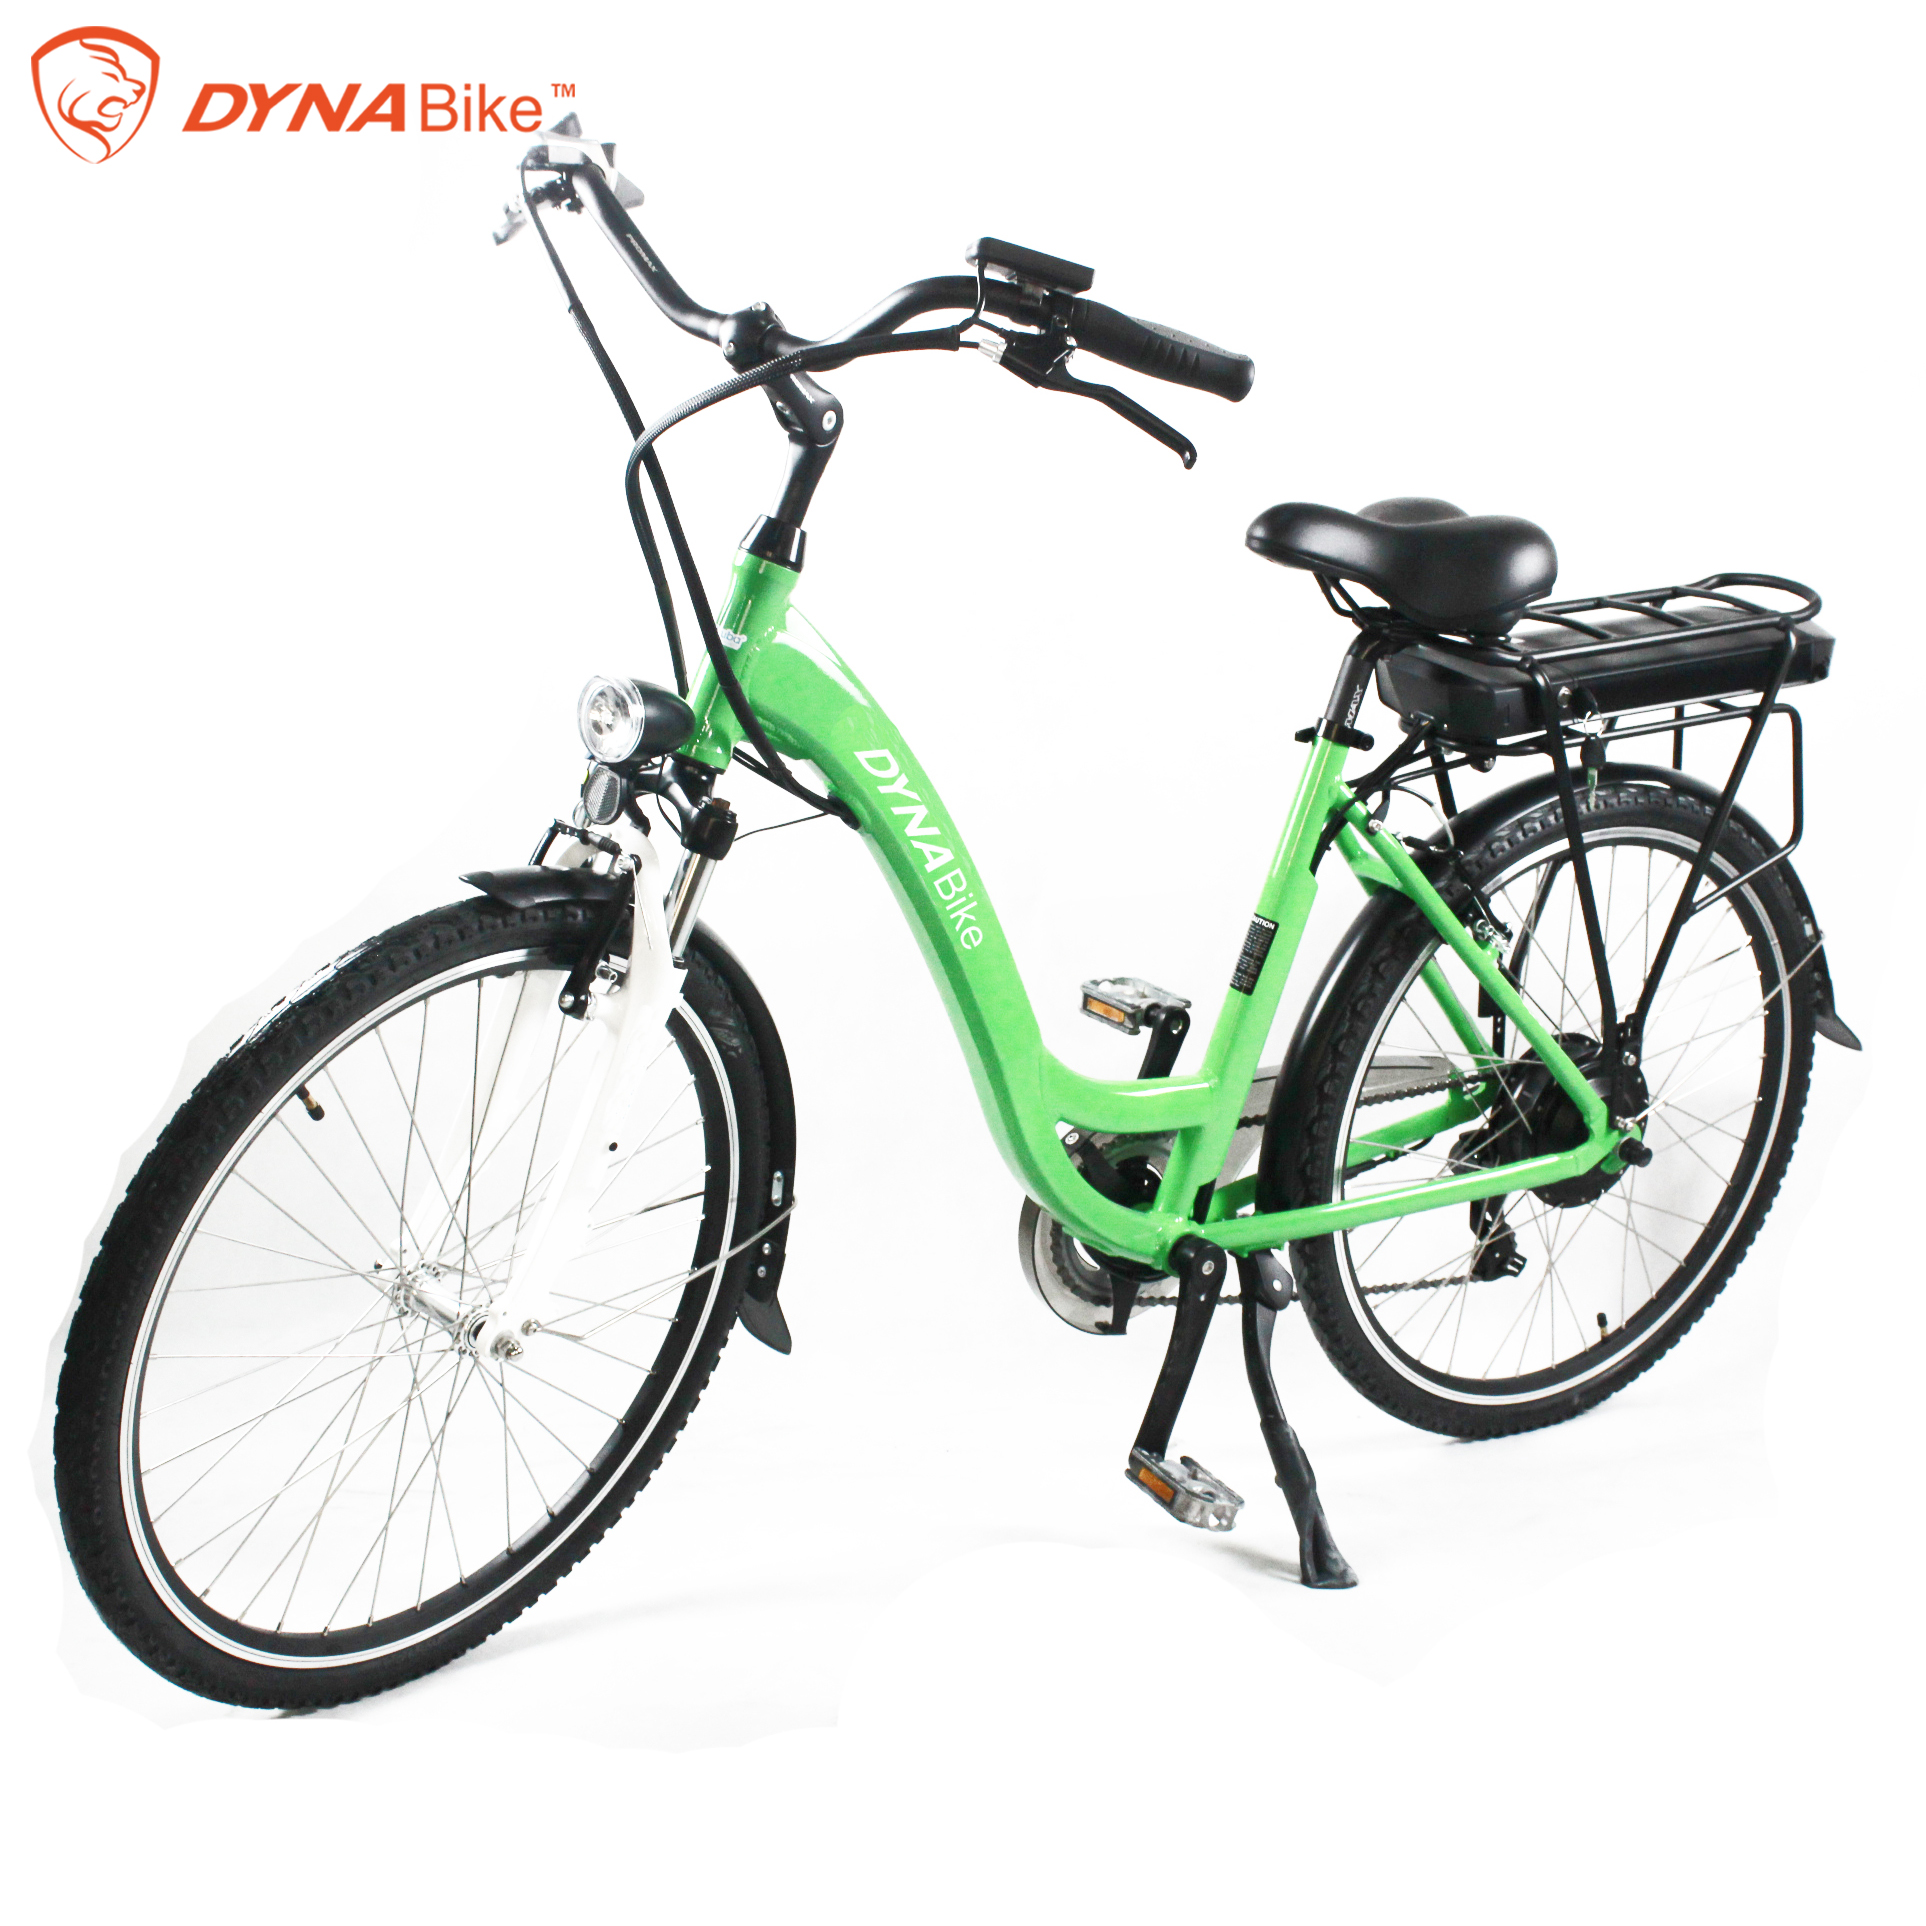 Shanghai 36V 300W 12.8Ah Women ride blue green city bike electric bicycle